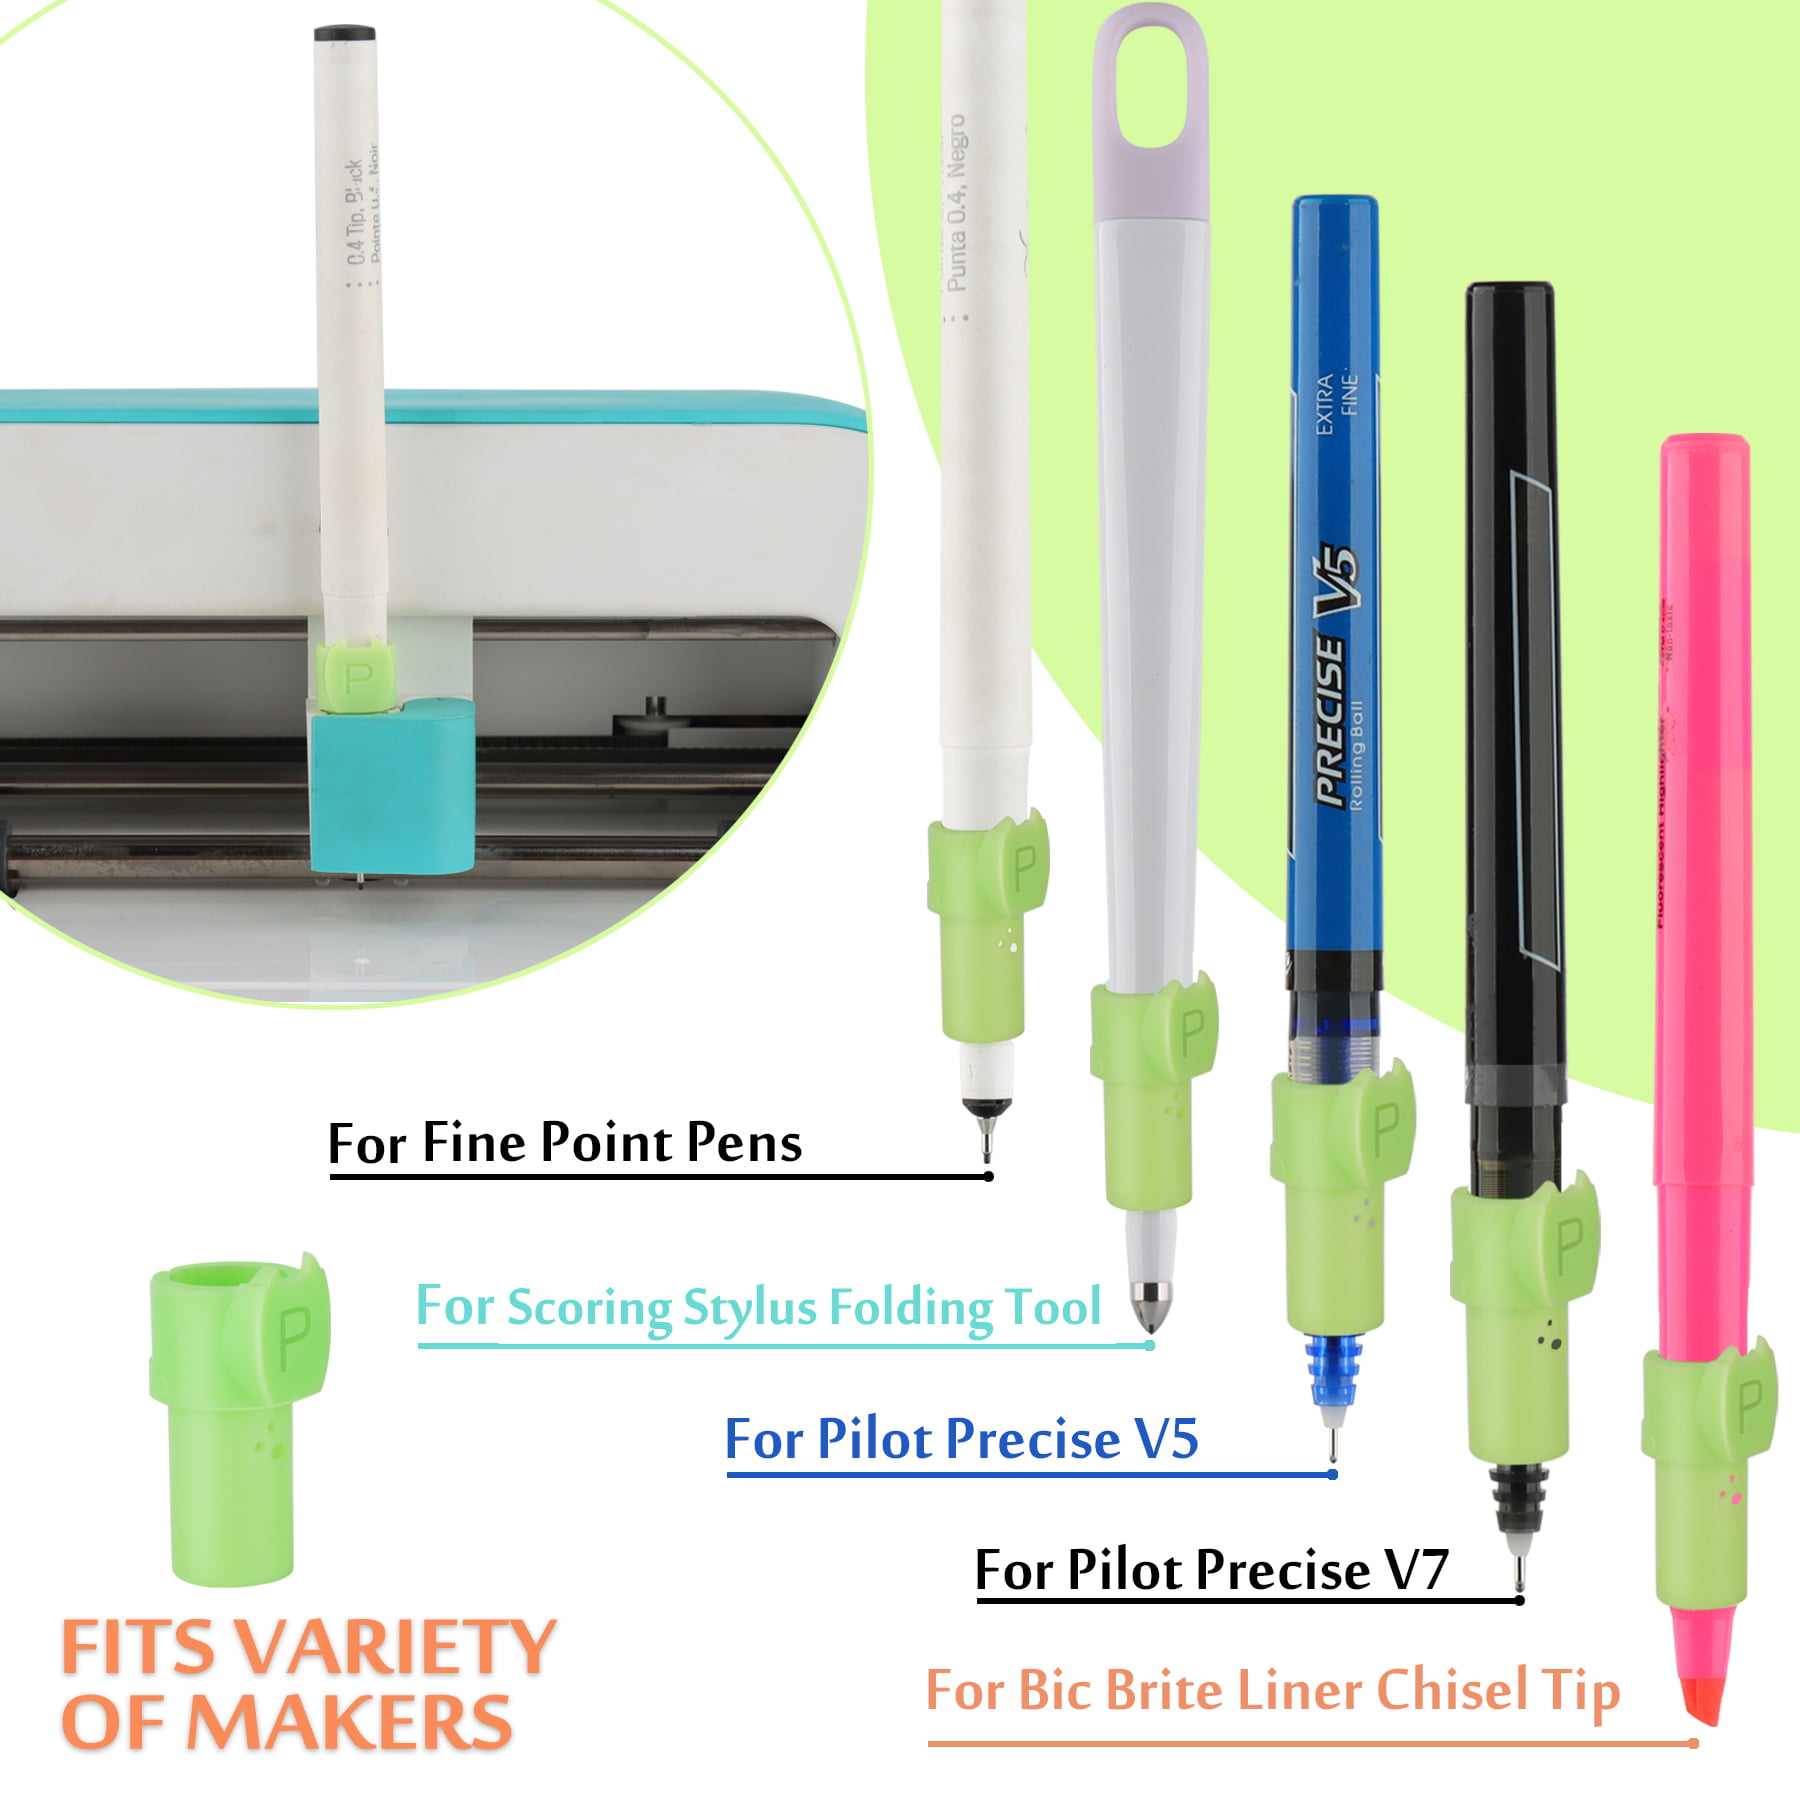 CRAVERLAND Pen Adapter Accessories Tool Set for Cricut Joy/Joy Xtra Cutting  Machine,Compatible with (Sharpie/Pilot/BIC/UM153/Cricut) Pens 